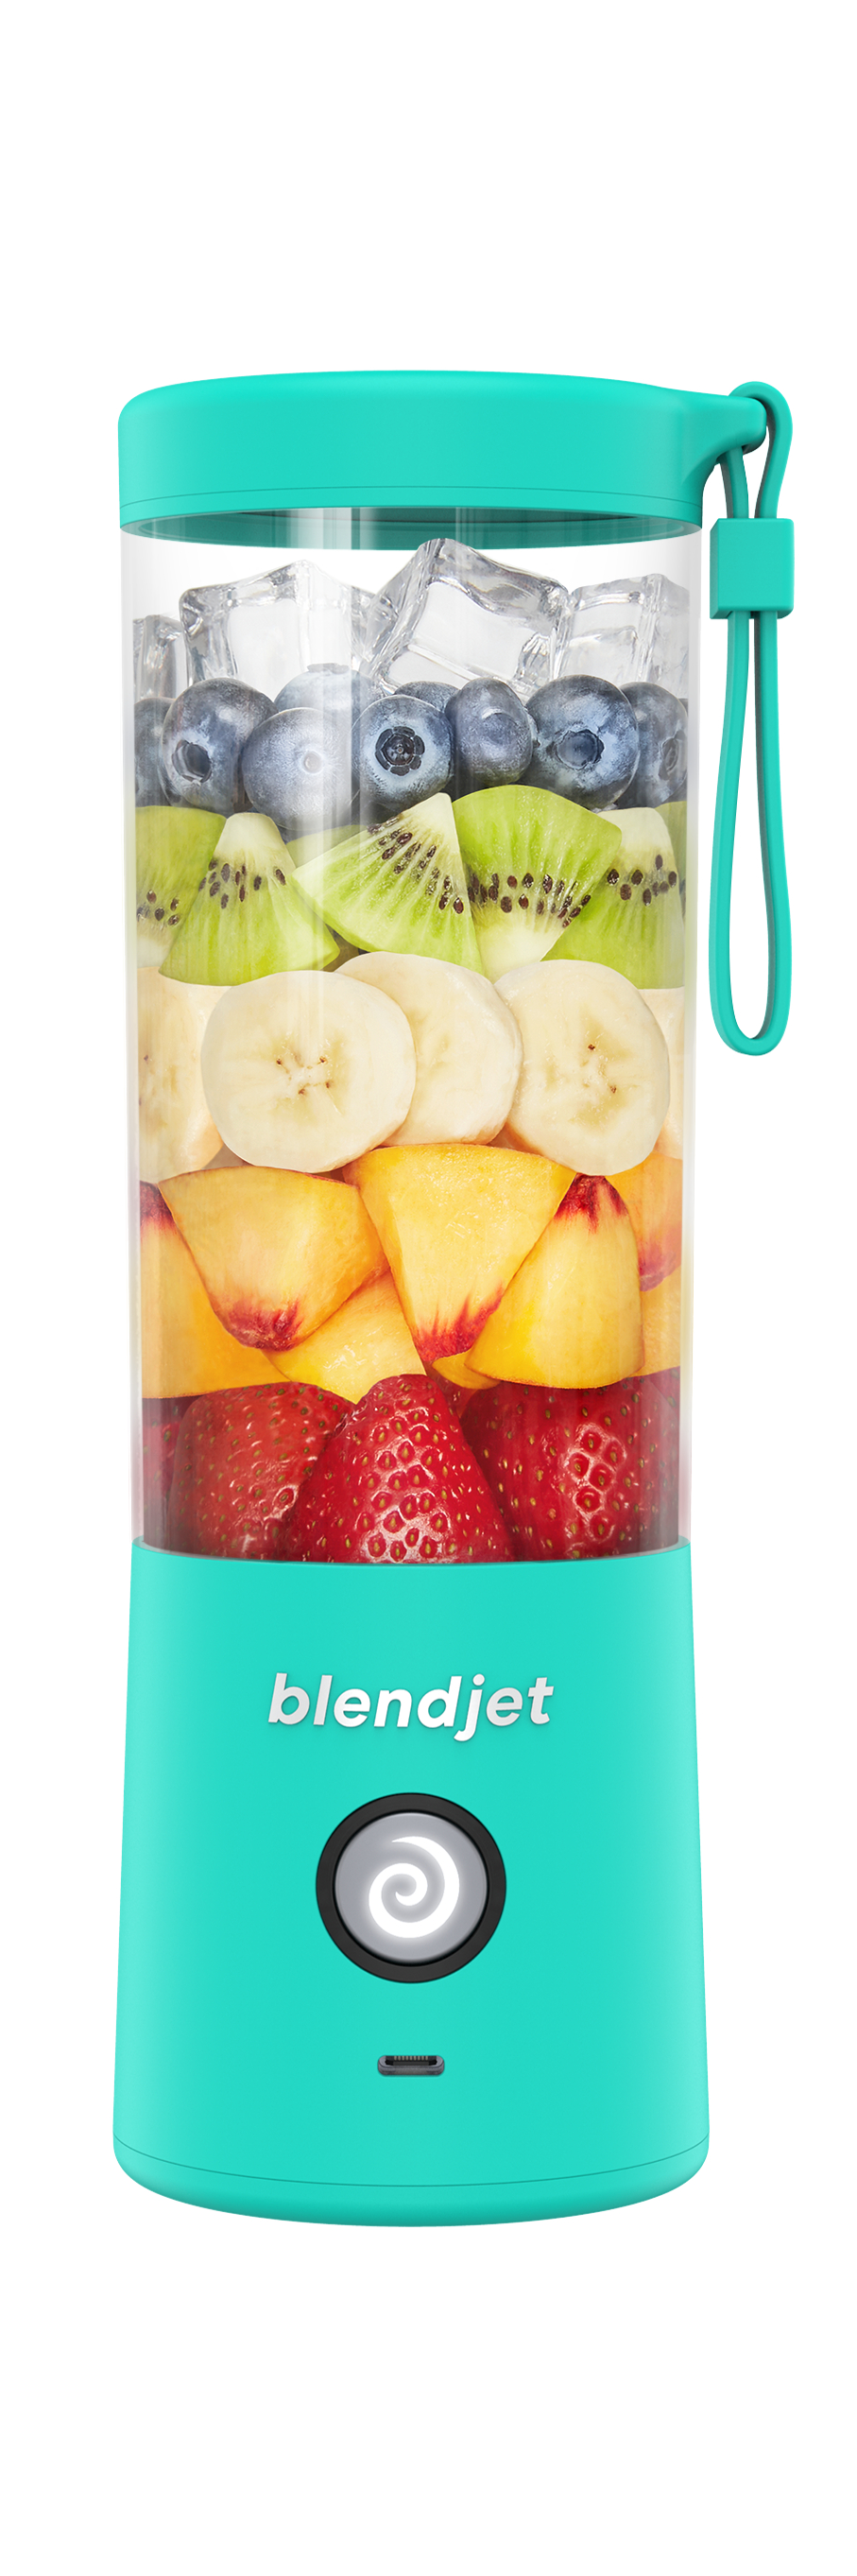 Standmixer (5 Blender Mint ml) Portable BLENDJET 2 450 Volt,